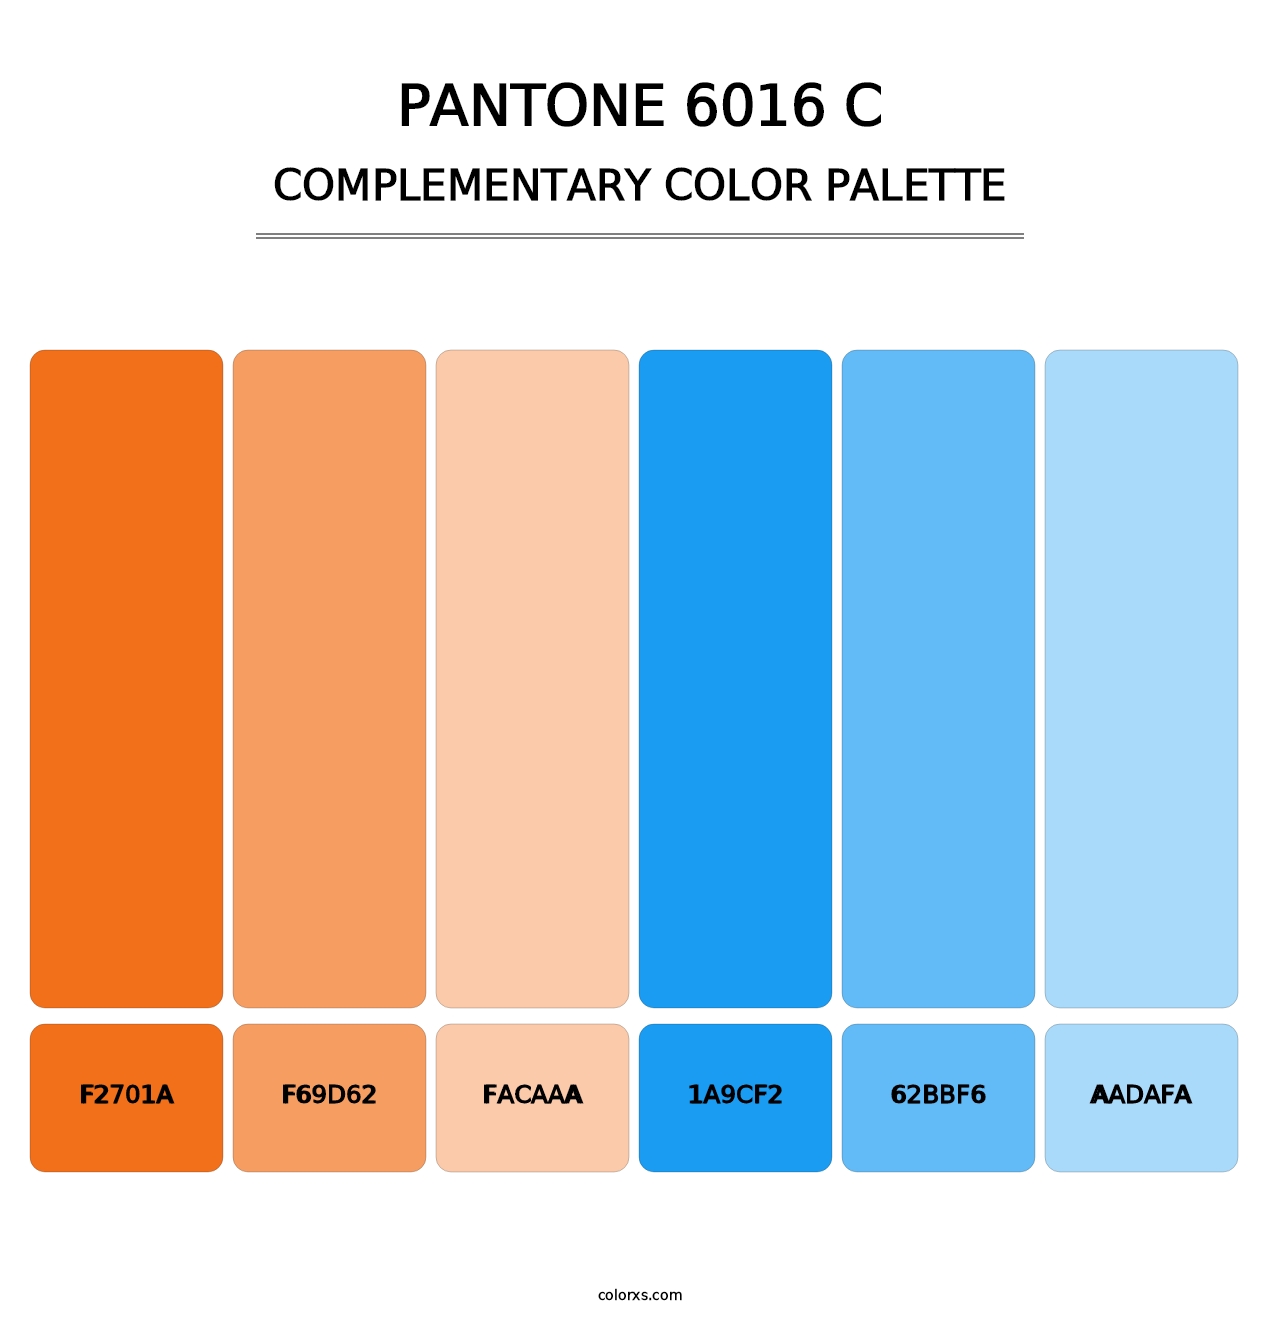 PANTONE 6016 C - Complementary Color Palette